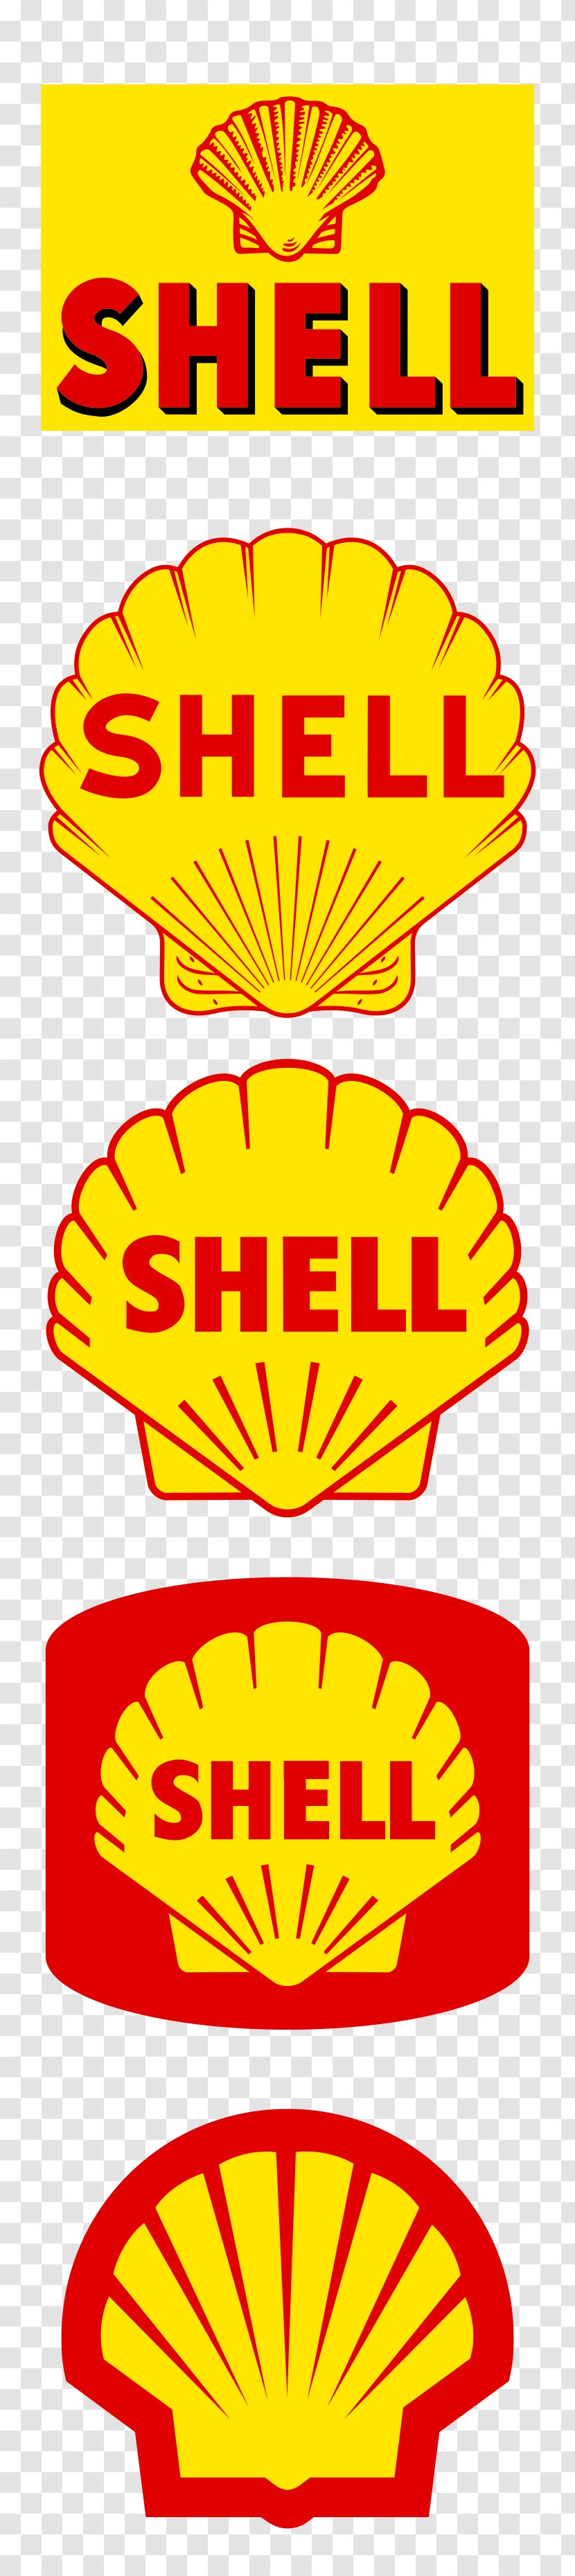 Chevron Corporation Royal Dutch Shell Logo Standard Oil Petroleum Transparent PNG